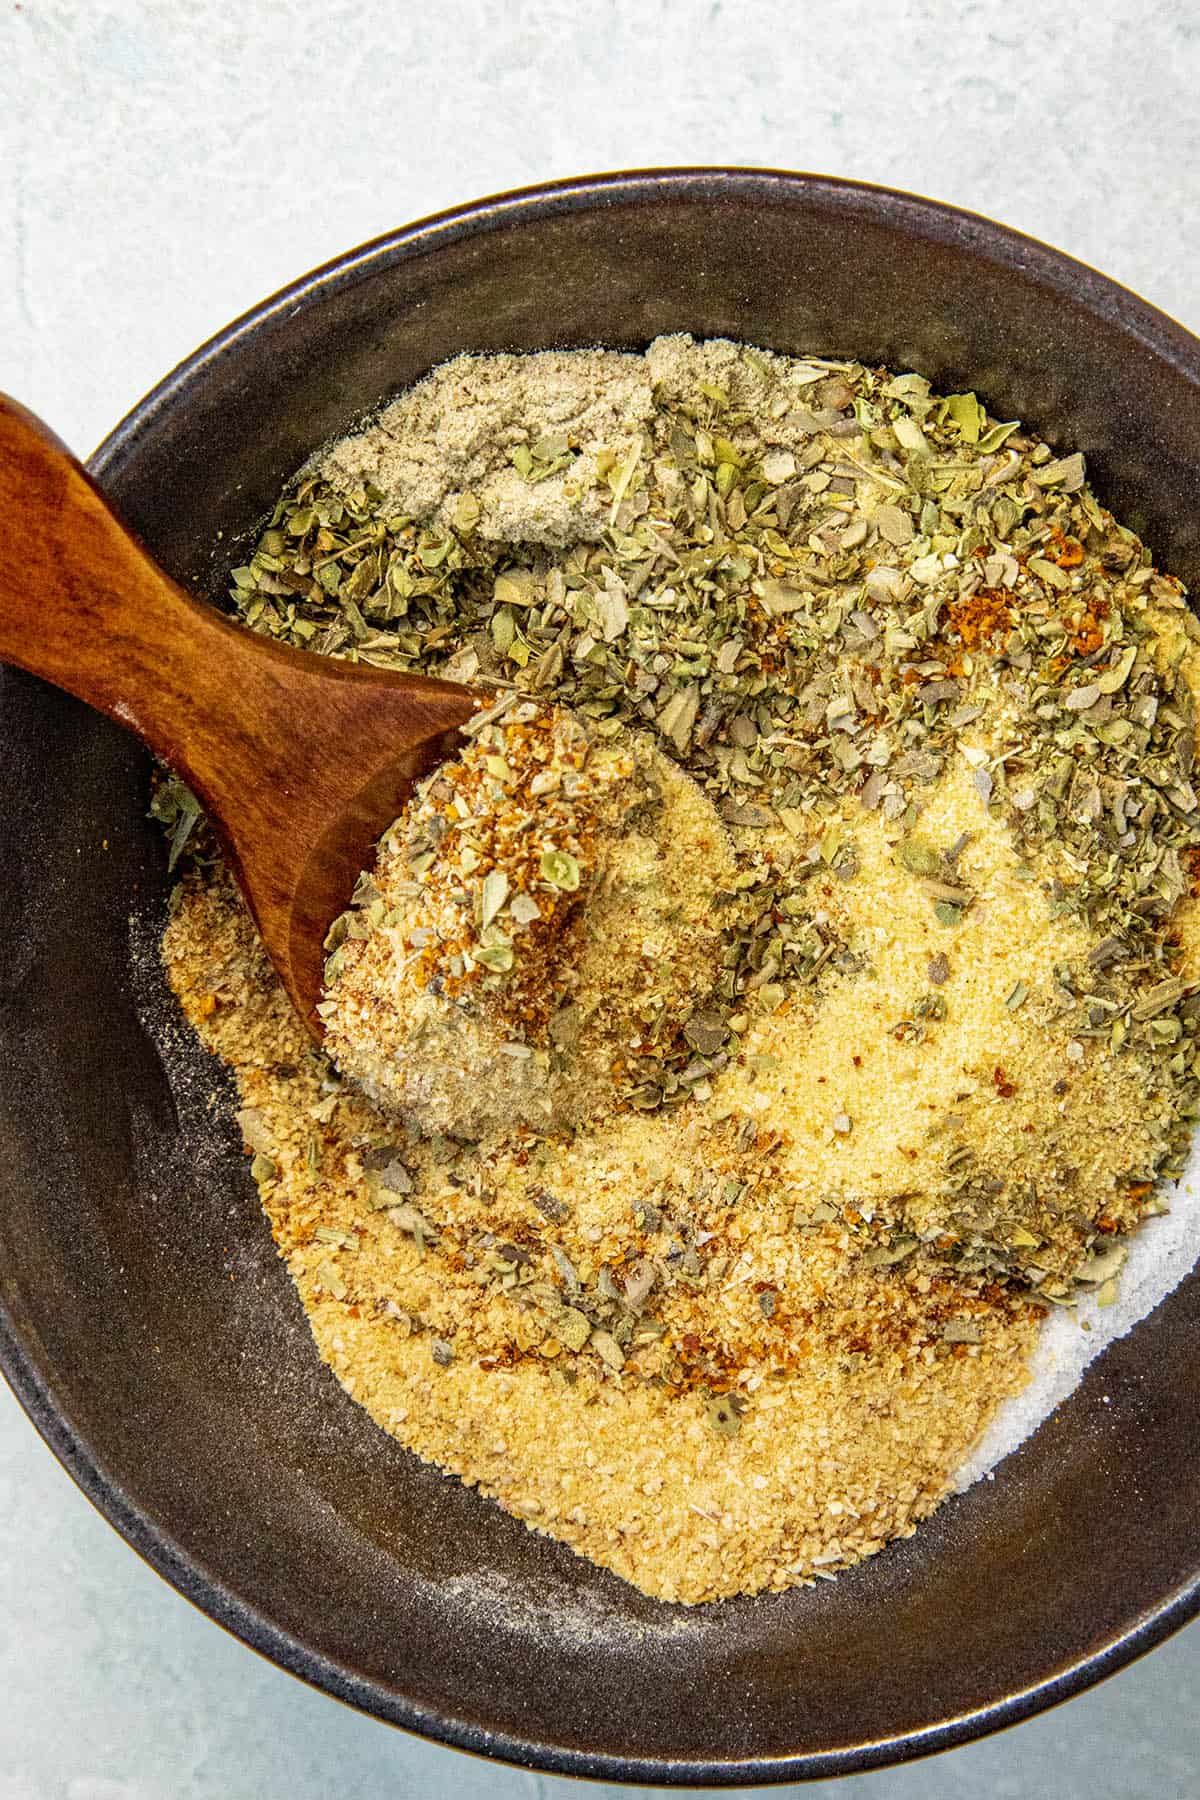 Adobo Seasoning ingredients being mixed in a bowl